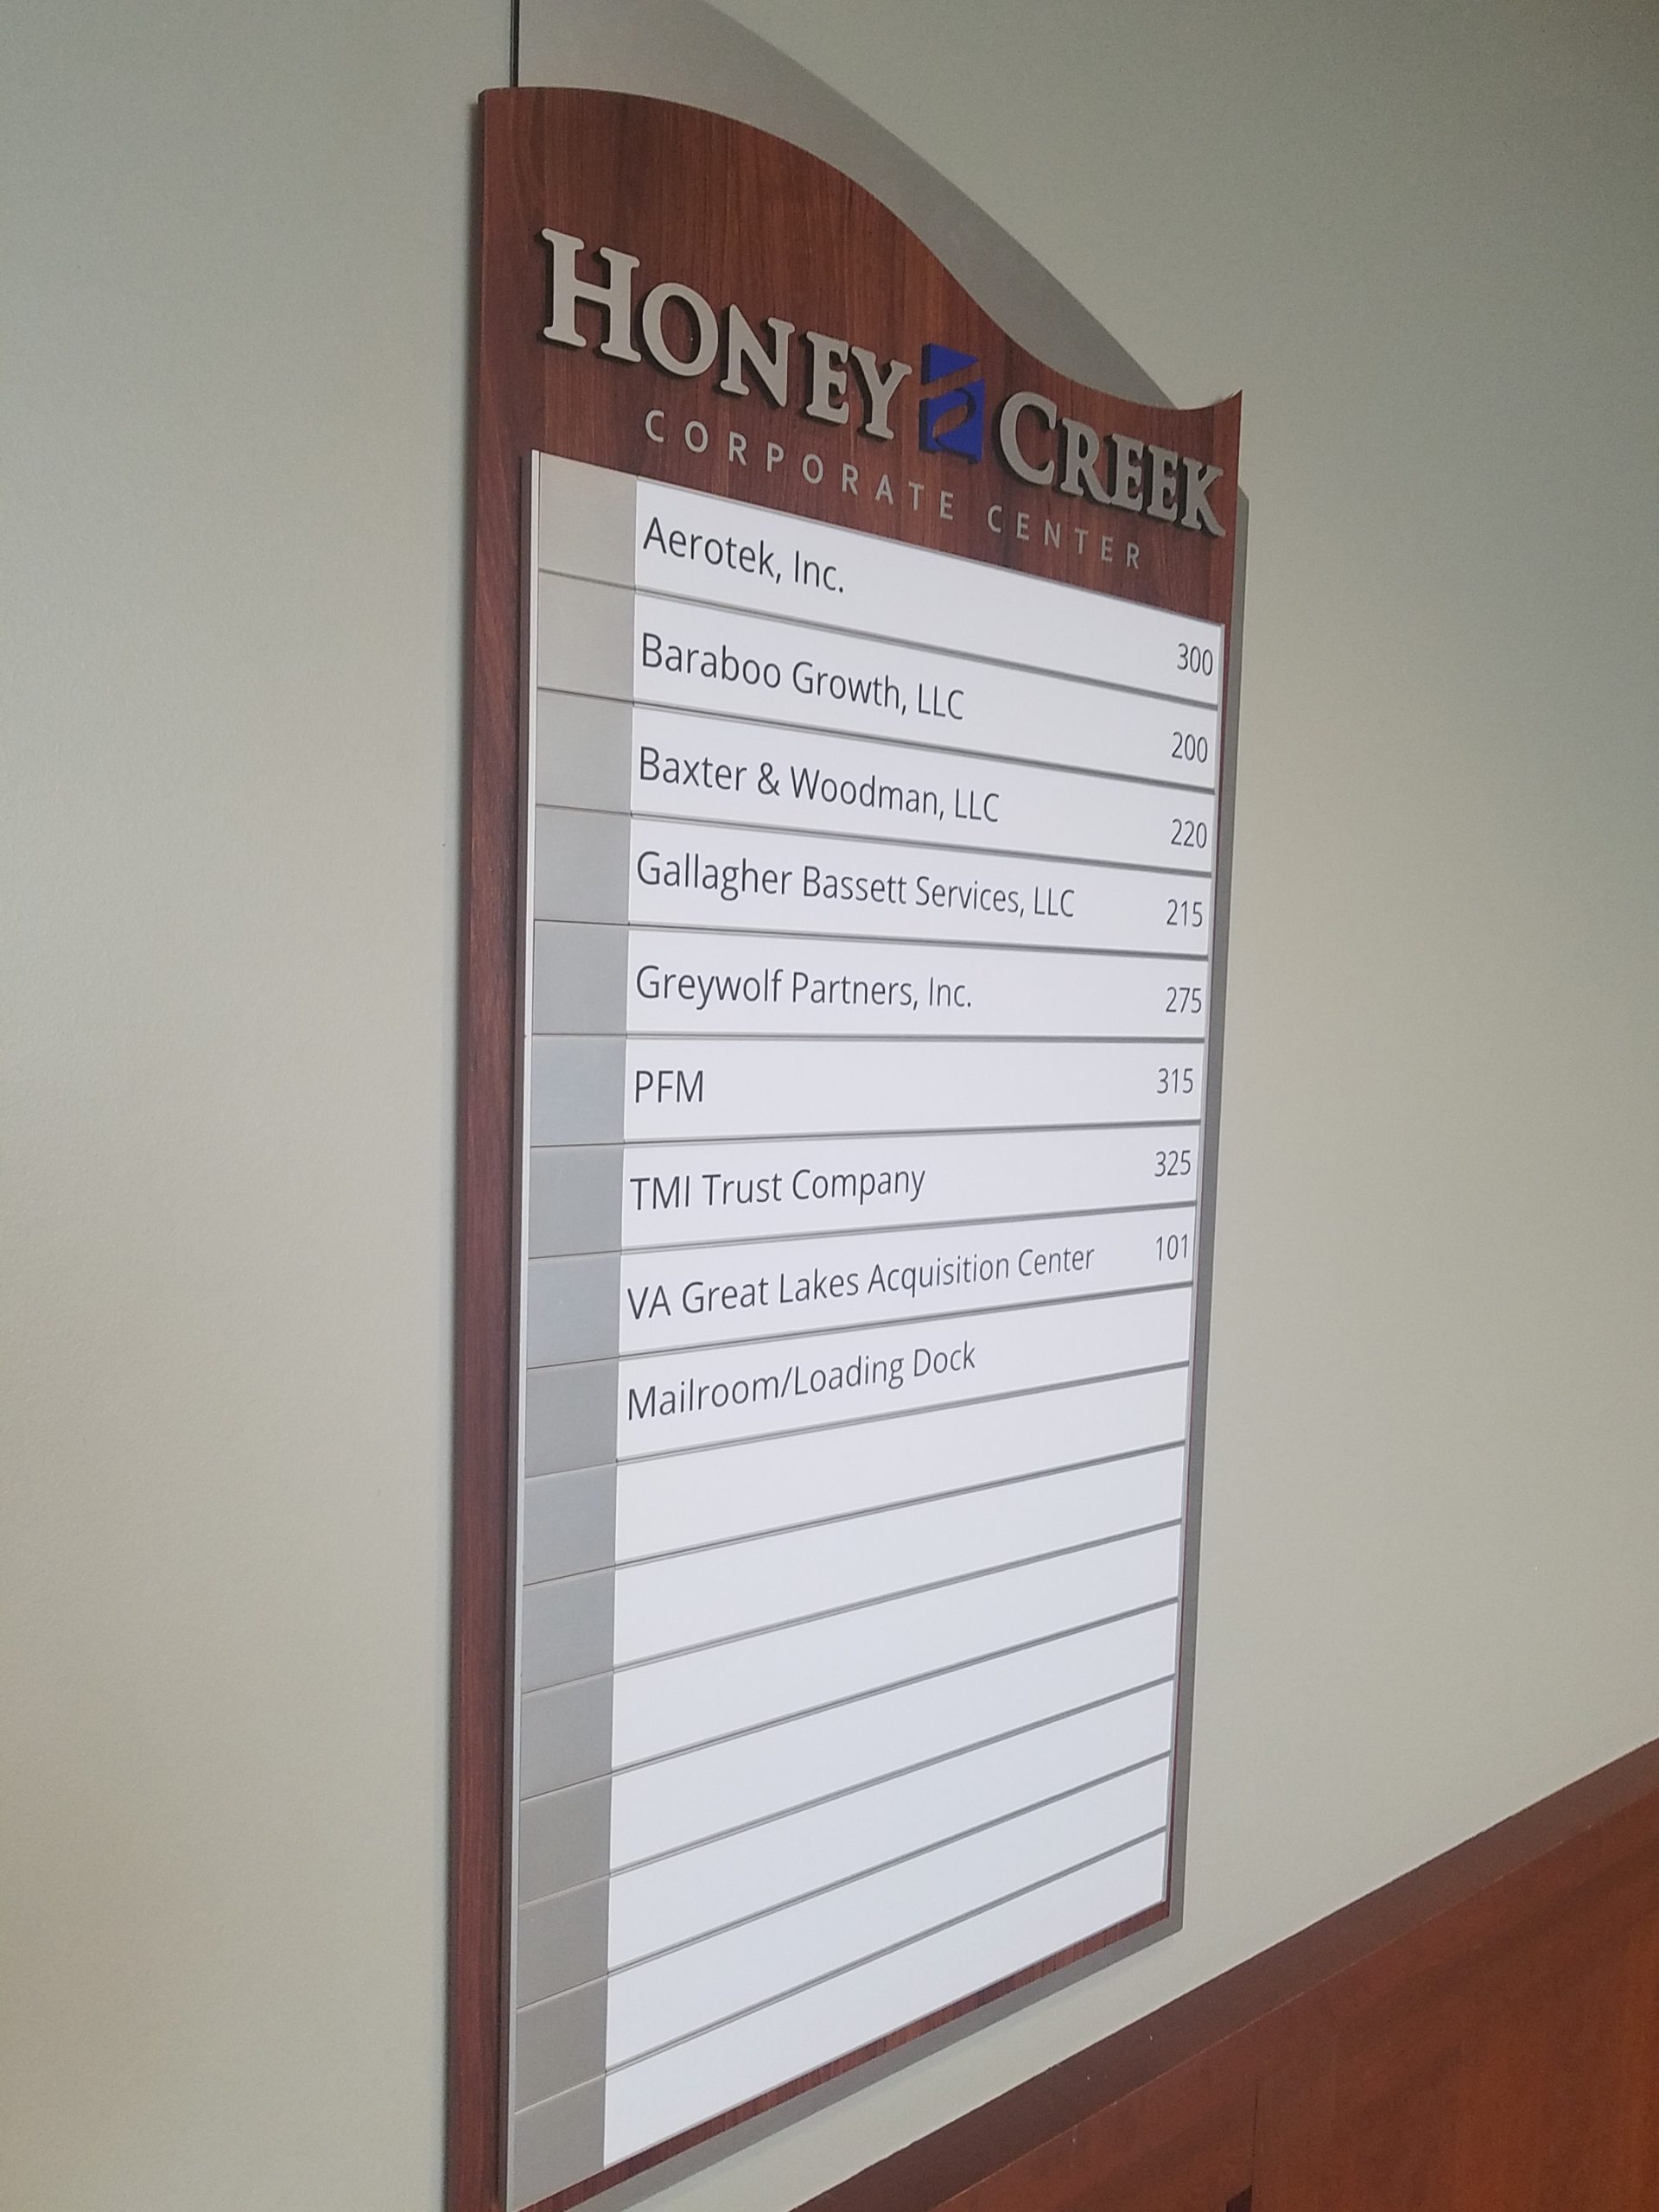 honey creek corporate center business signage